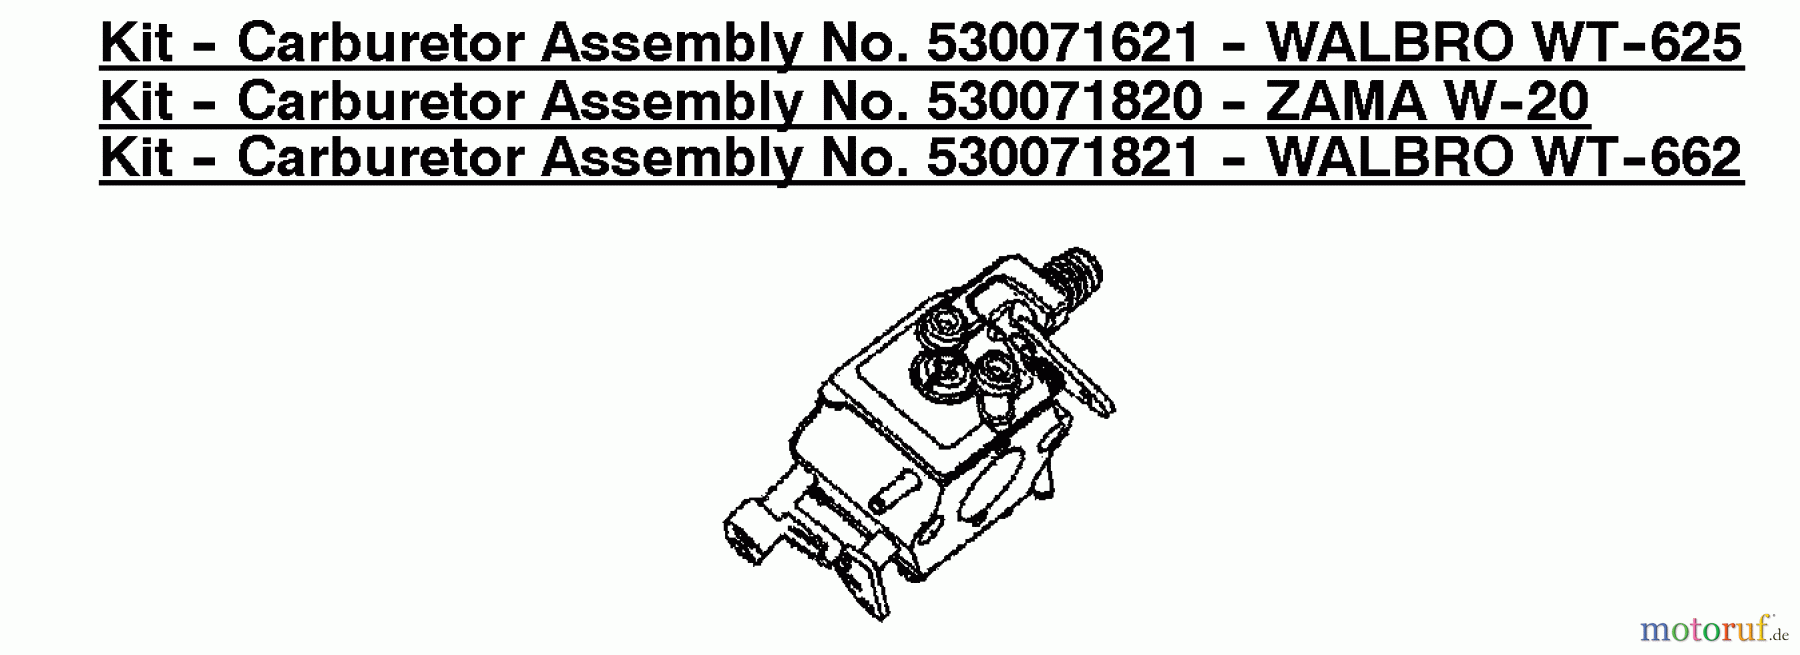  Poulan / Weed Eater Motorsägen PP260 (Type 4) - Poulan Pro Chainsaw Kit - Carburetor Assembly